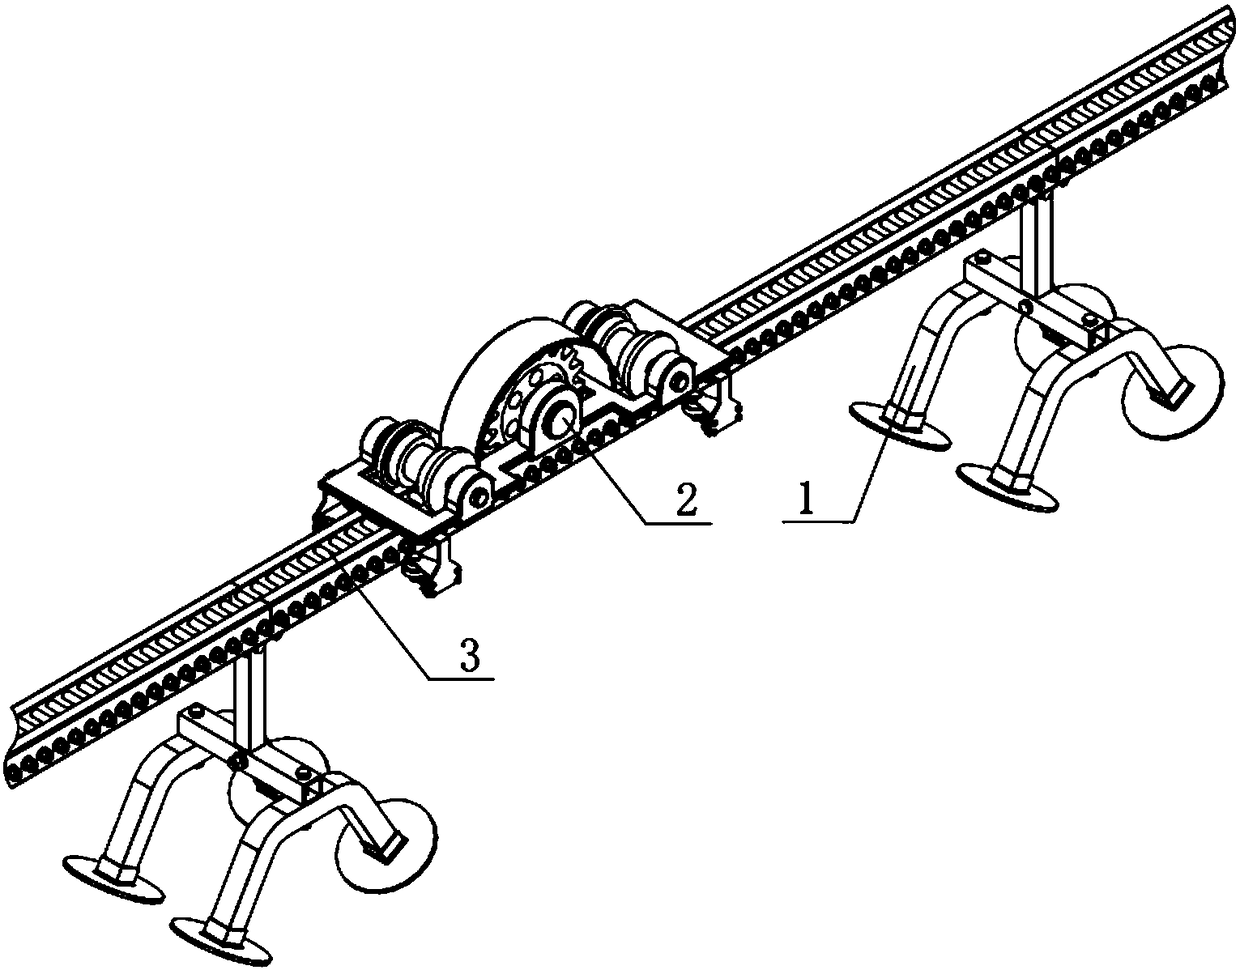 Pin wheel type C-shaped steel rail of monorail transport vehicle